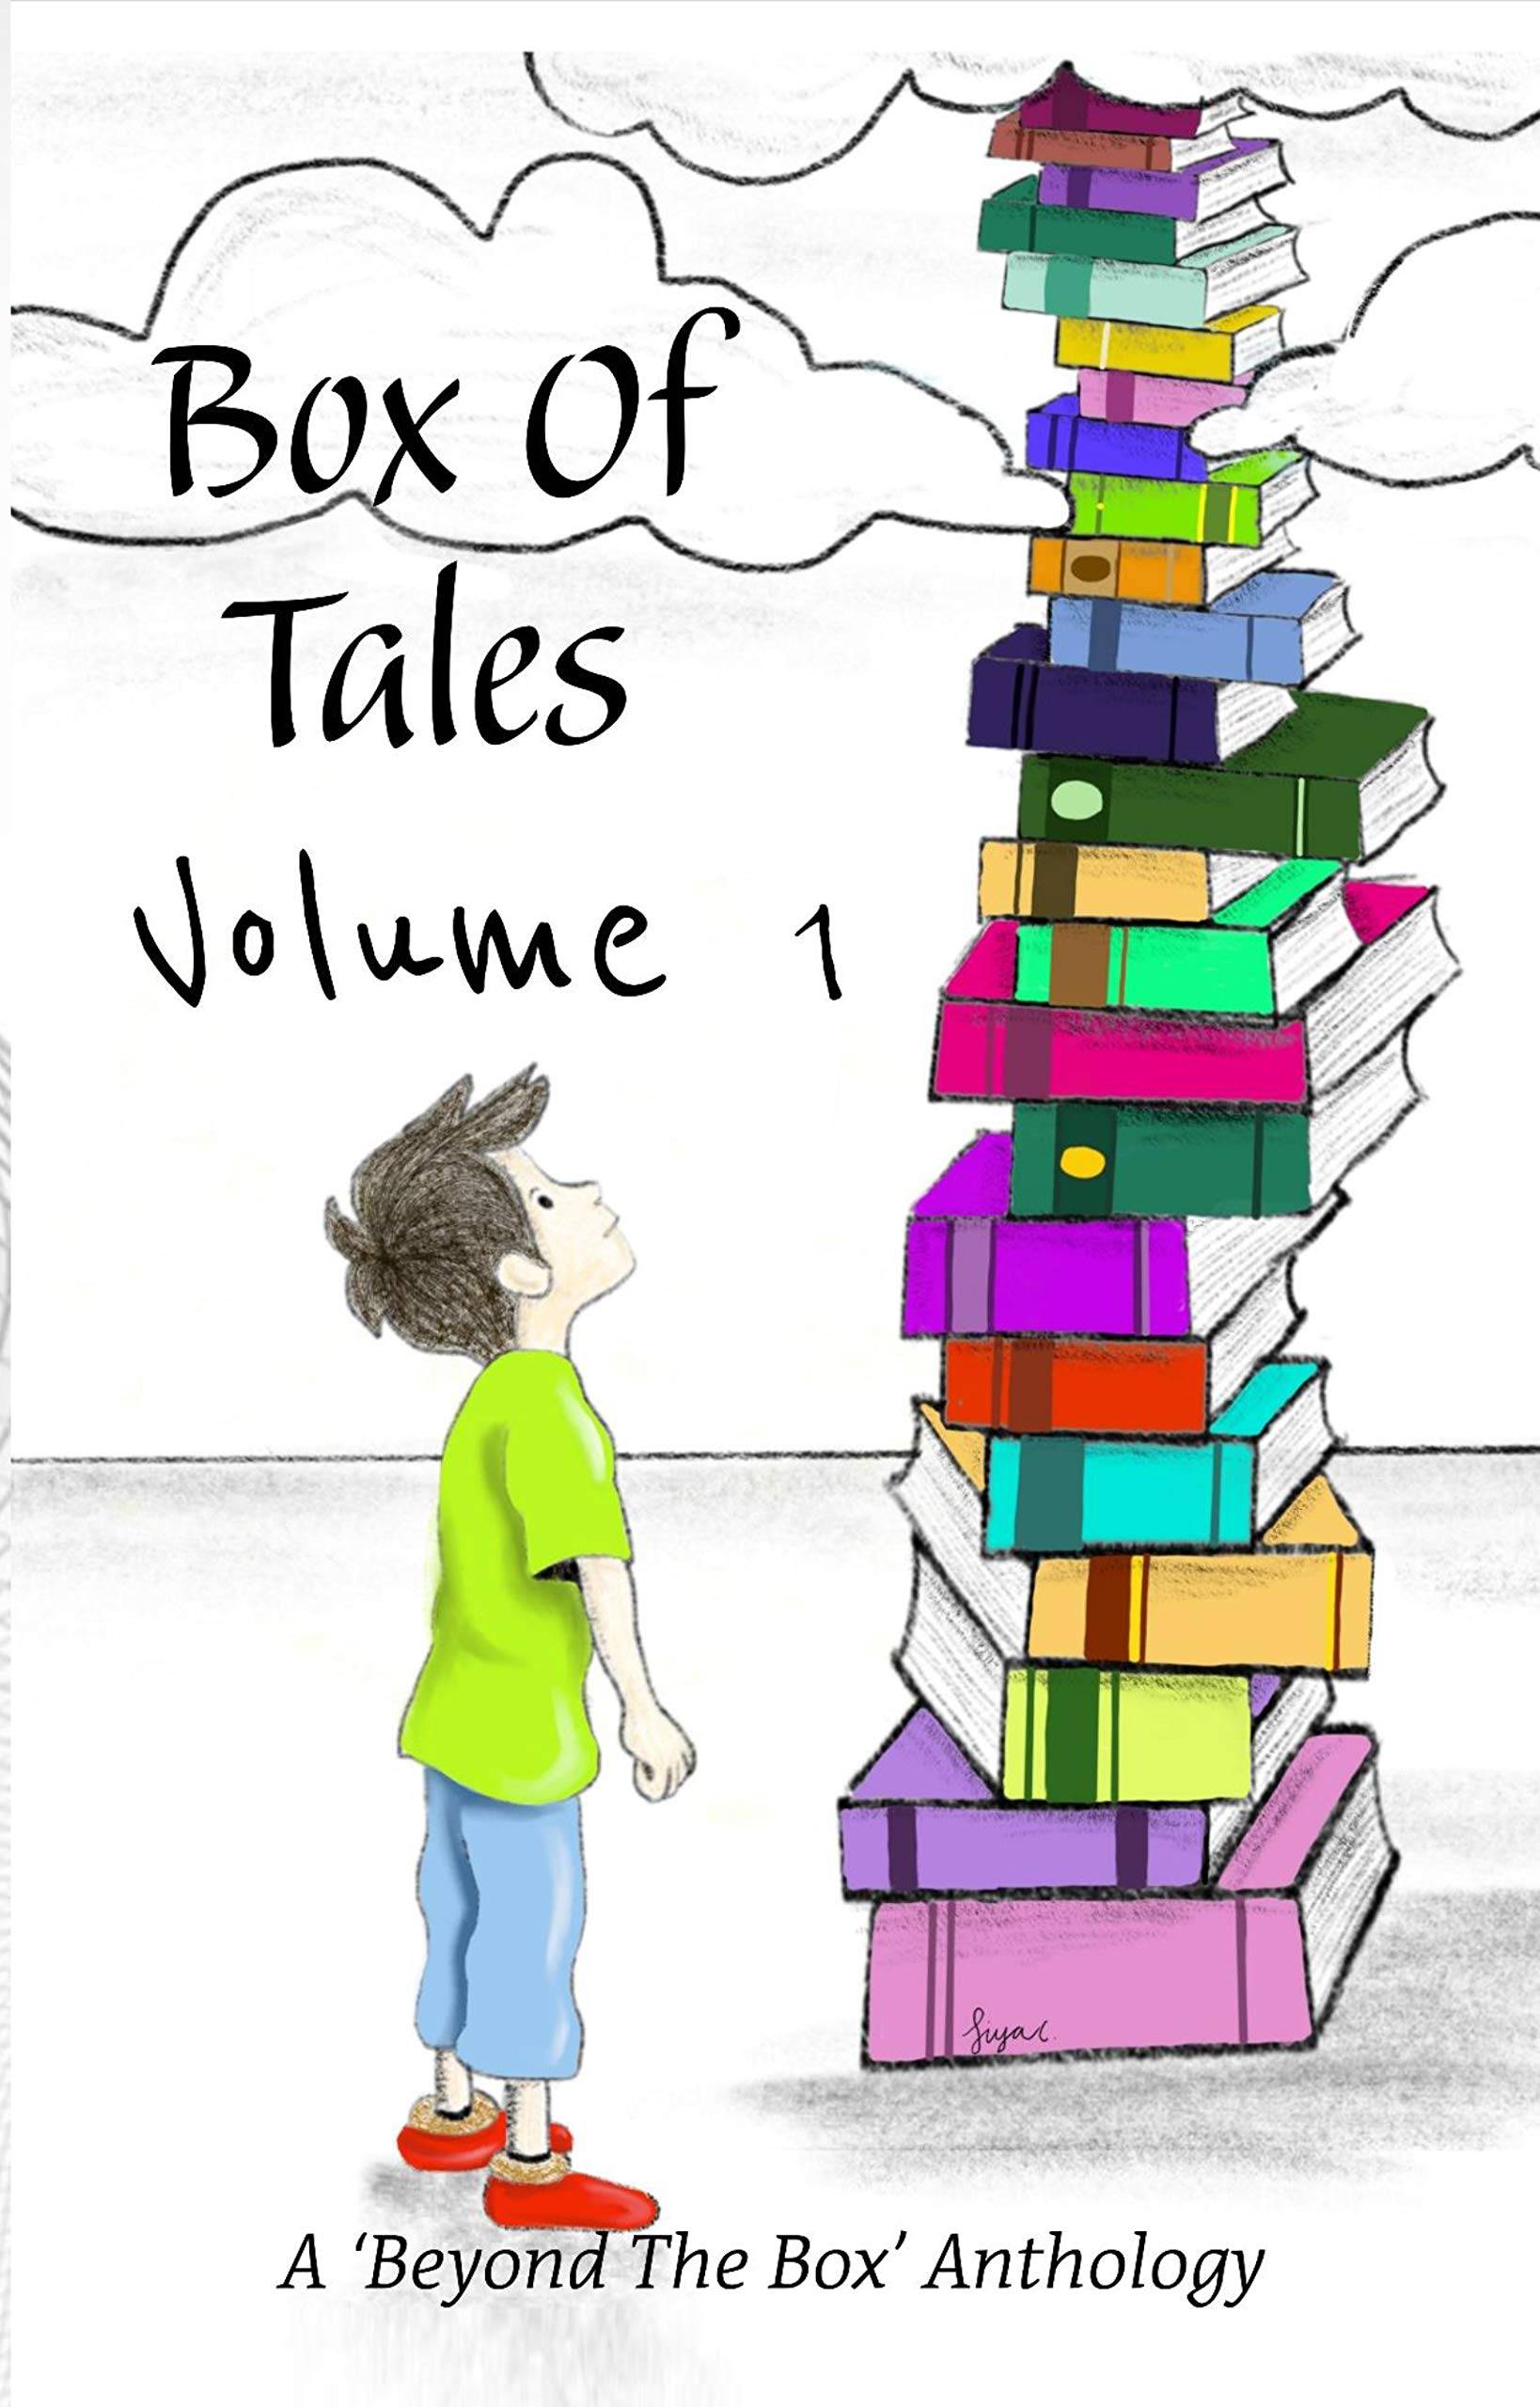 IMG : Box of tales Volume 1